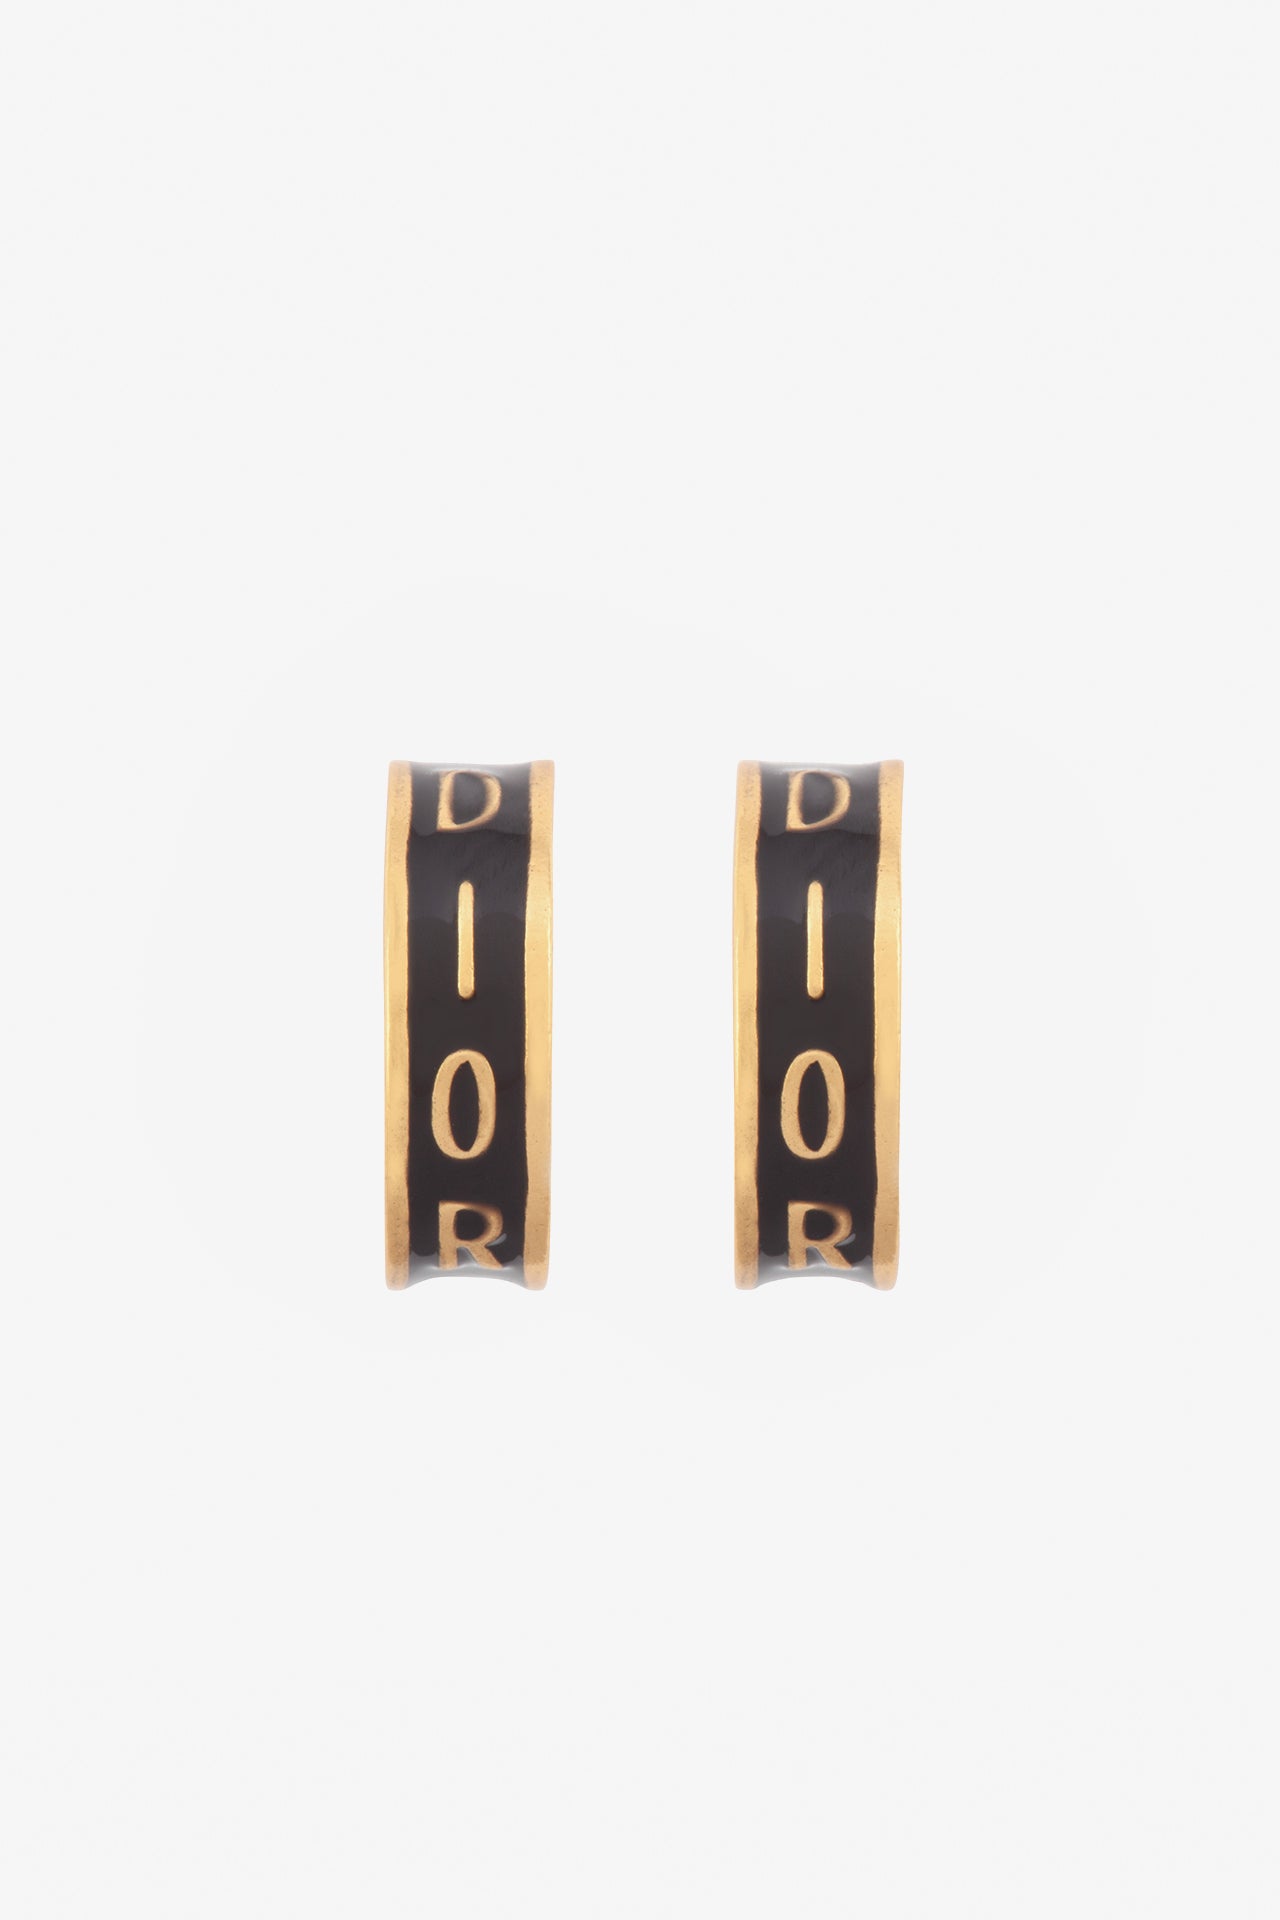 Gold Black Plated Dior Script Earrings